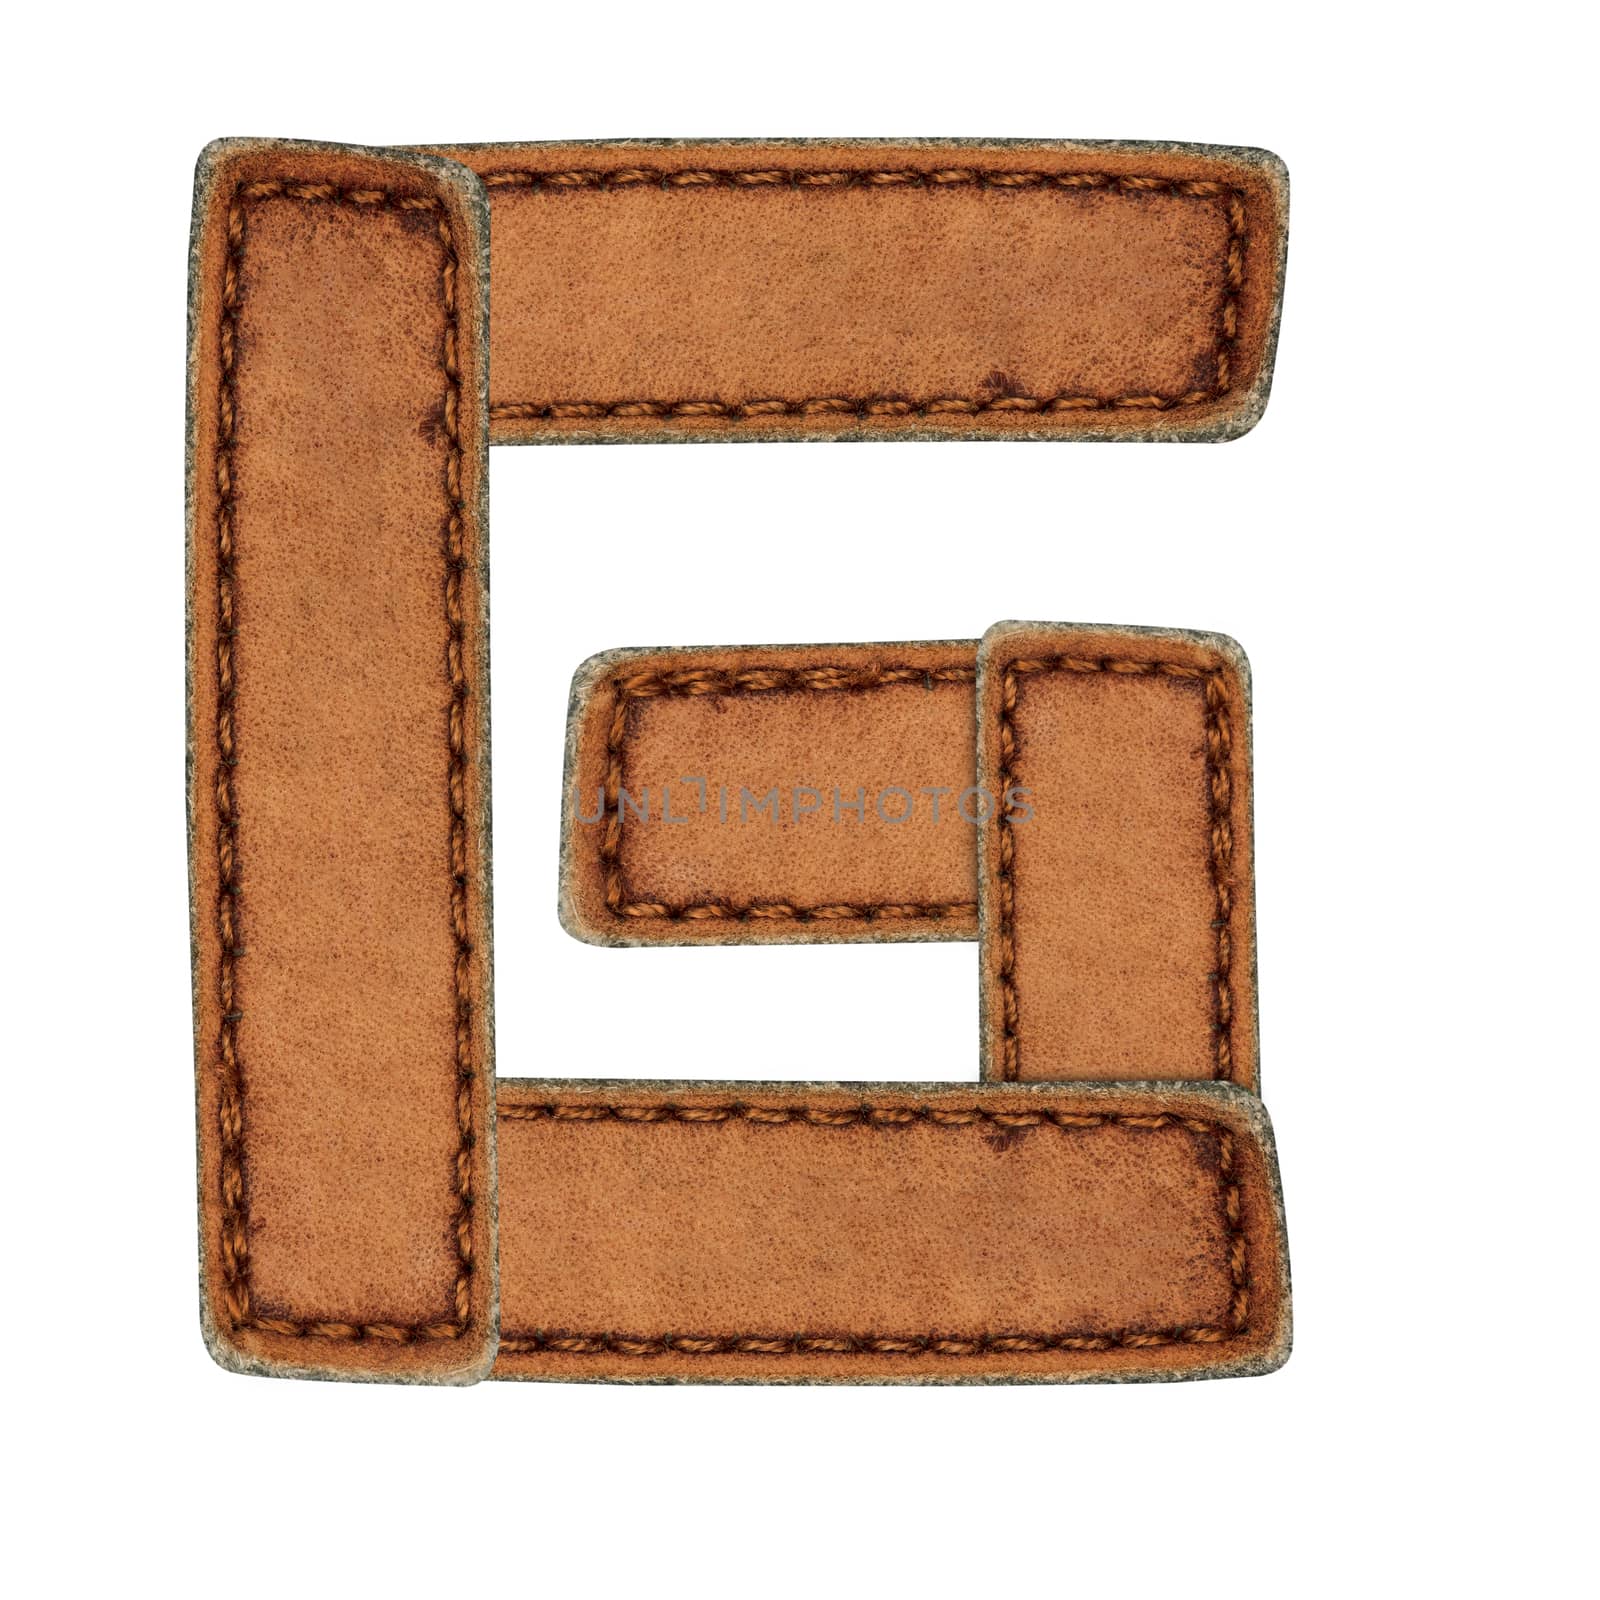 Leather alphabet isolate on white